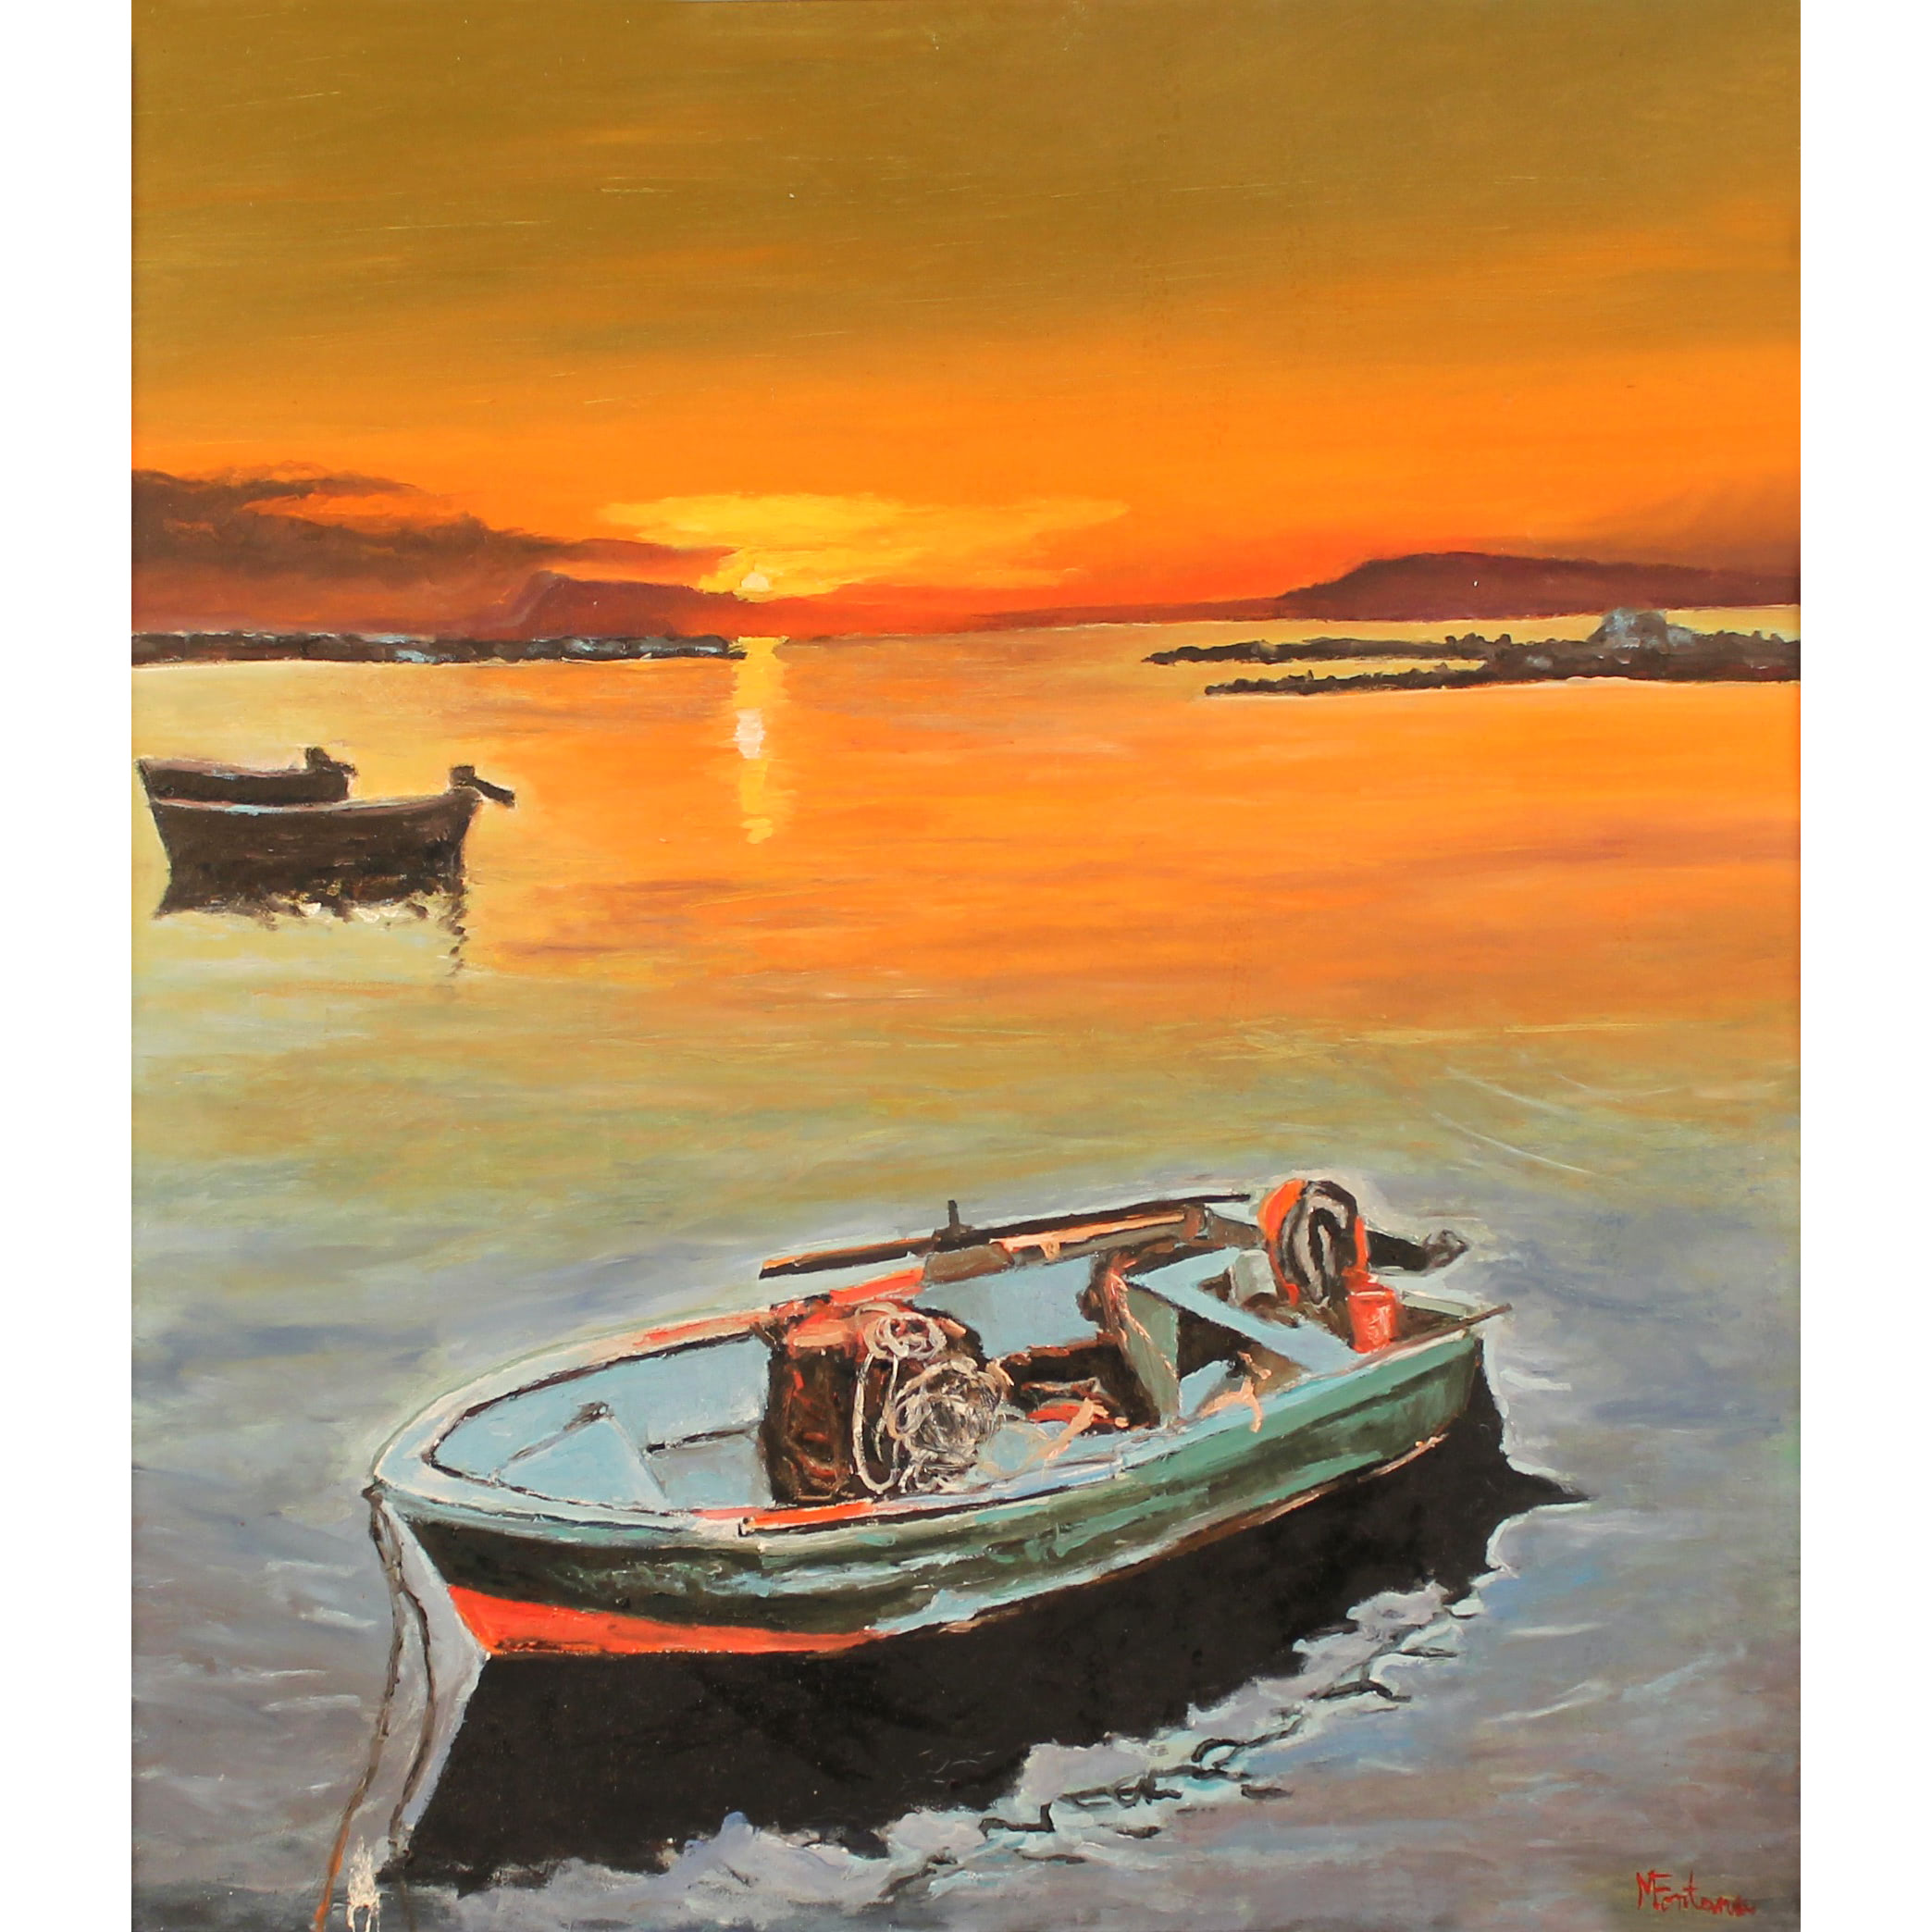 Michele Fontana (1965) "Barche da pesca" - "Fishing Boats"